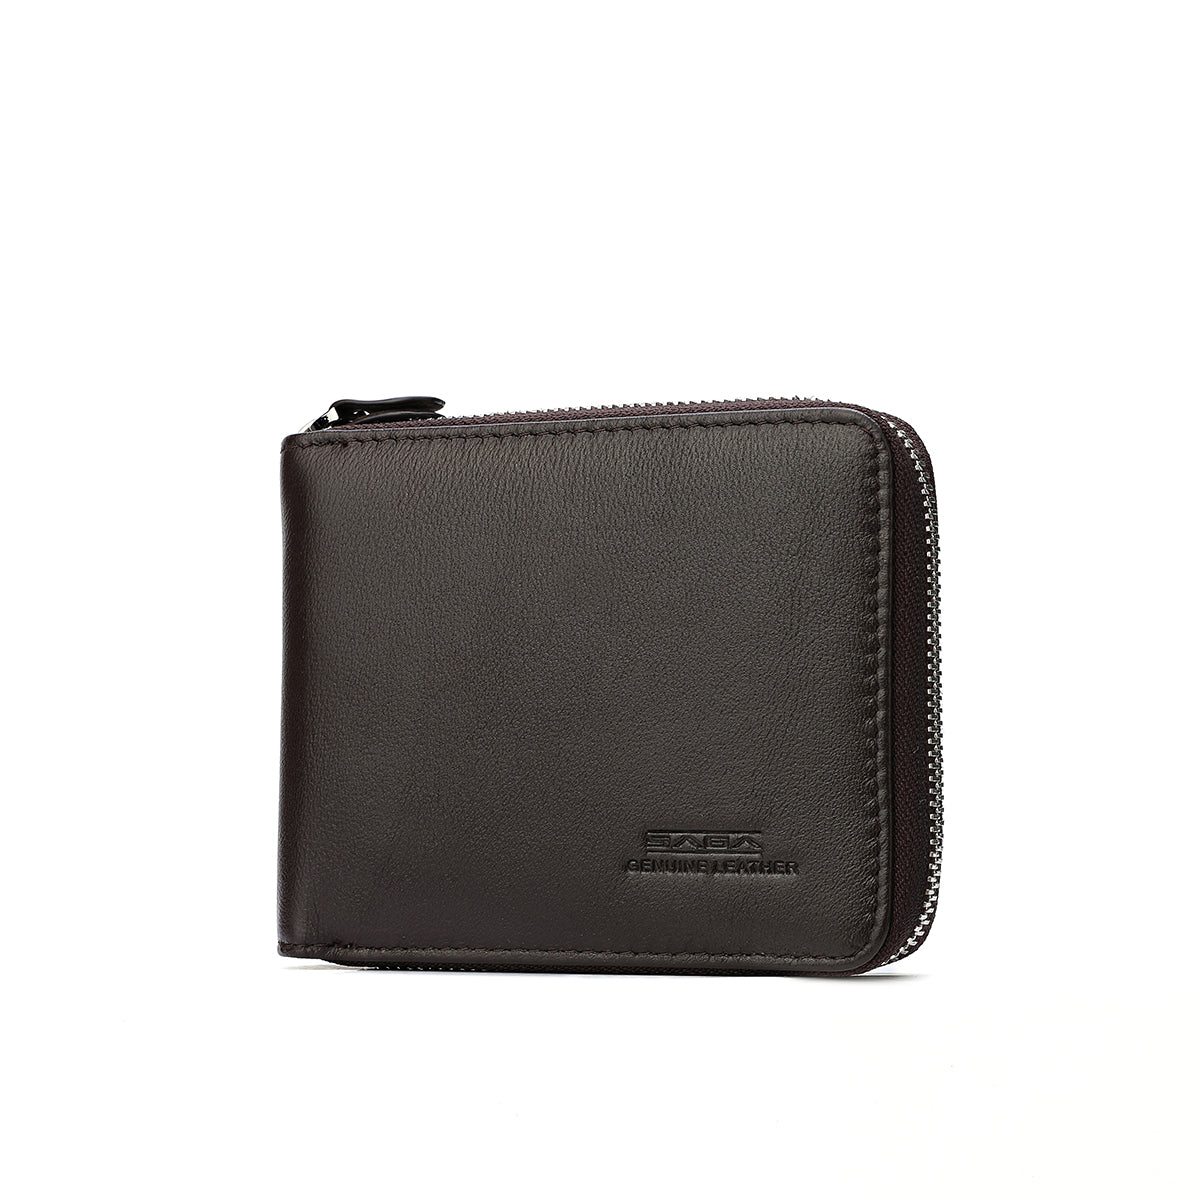 Men's genuine leather pocket wallet with zip closure, black or brown